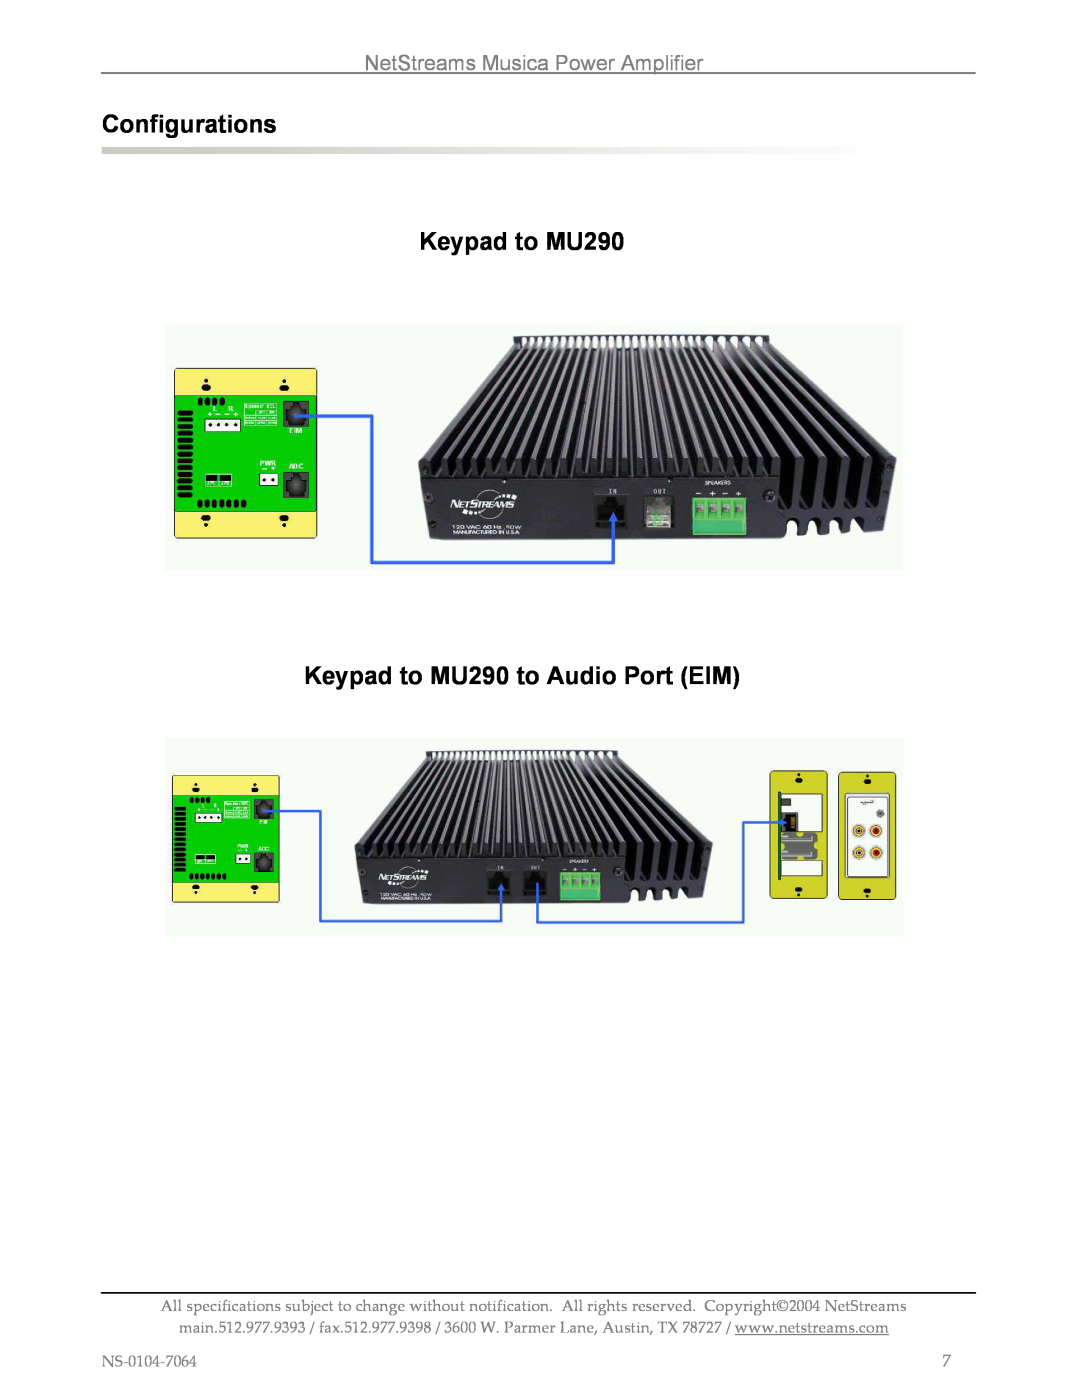 Musica Configurations Keypad to MU290, Keypad to MU290 to Audio Port EIM, NetStreams Musica Power Amplifier 